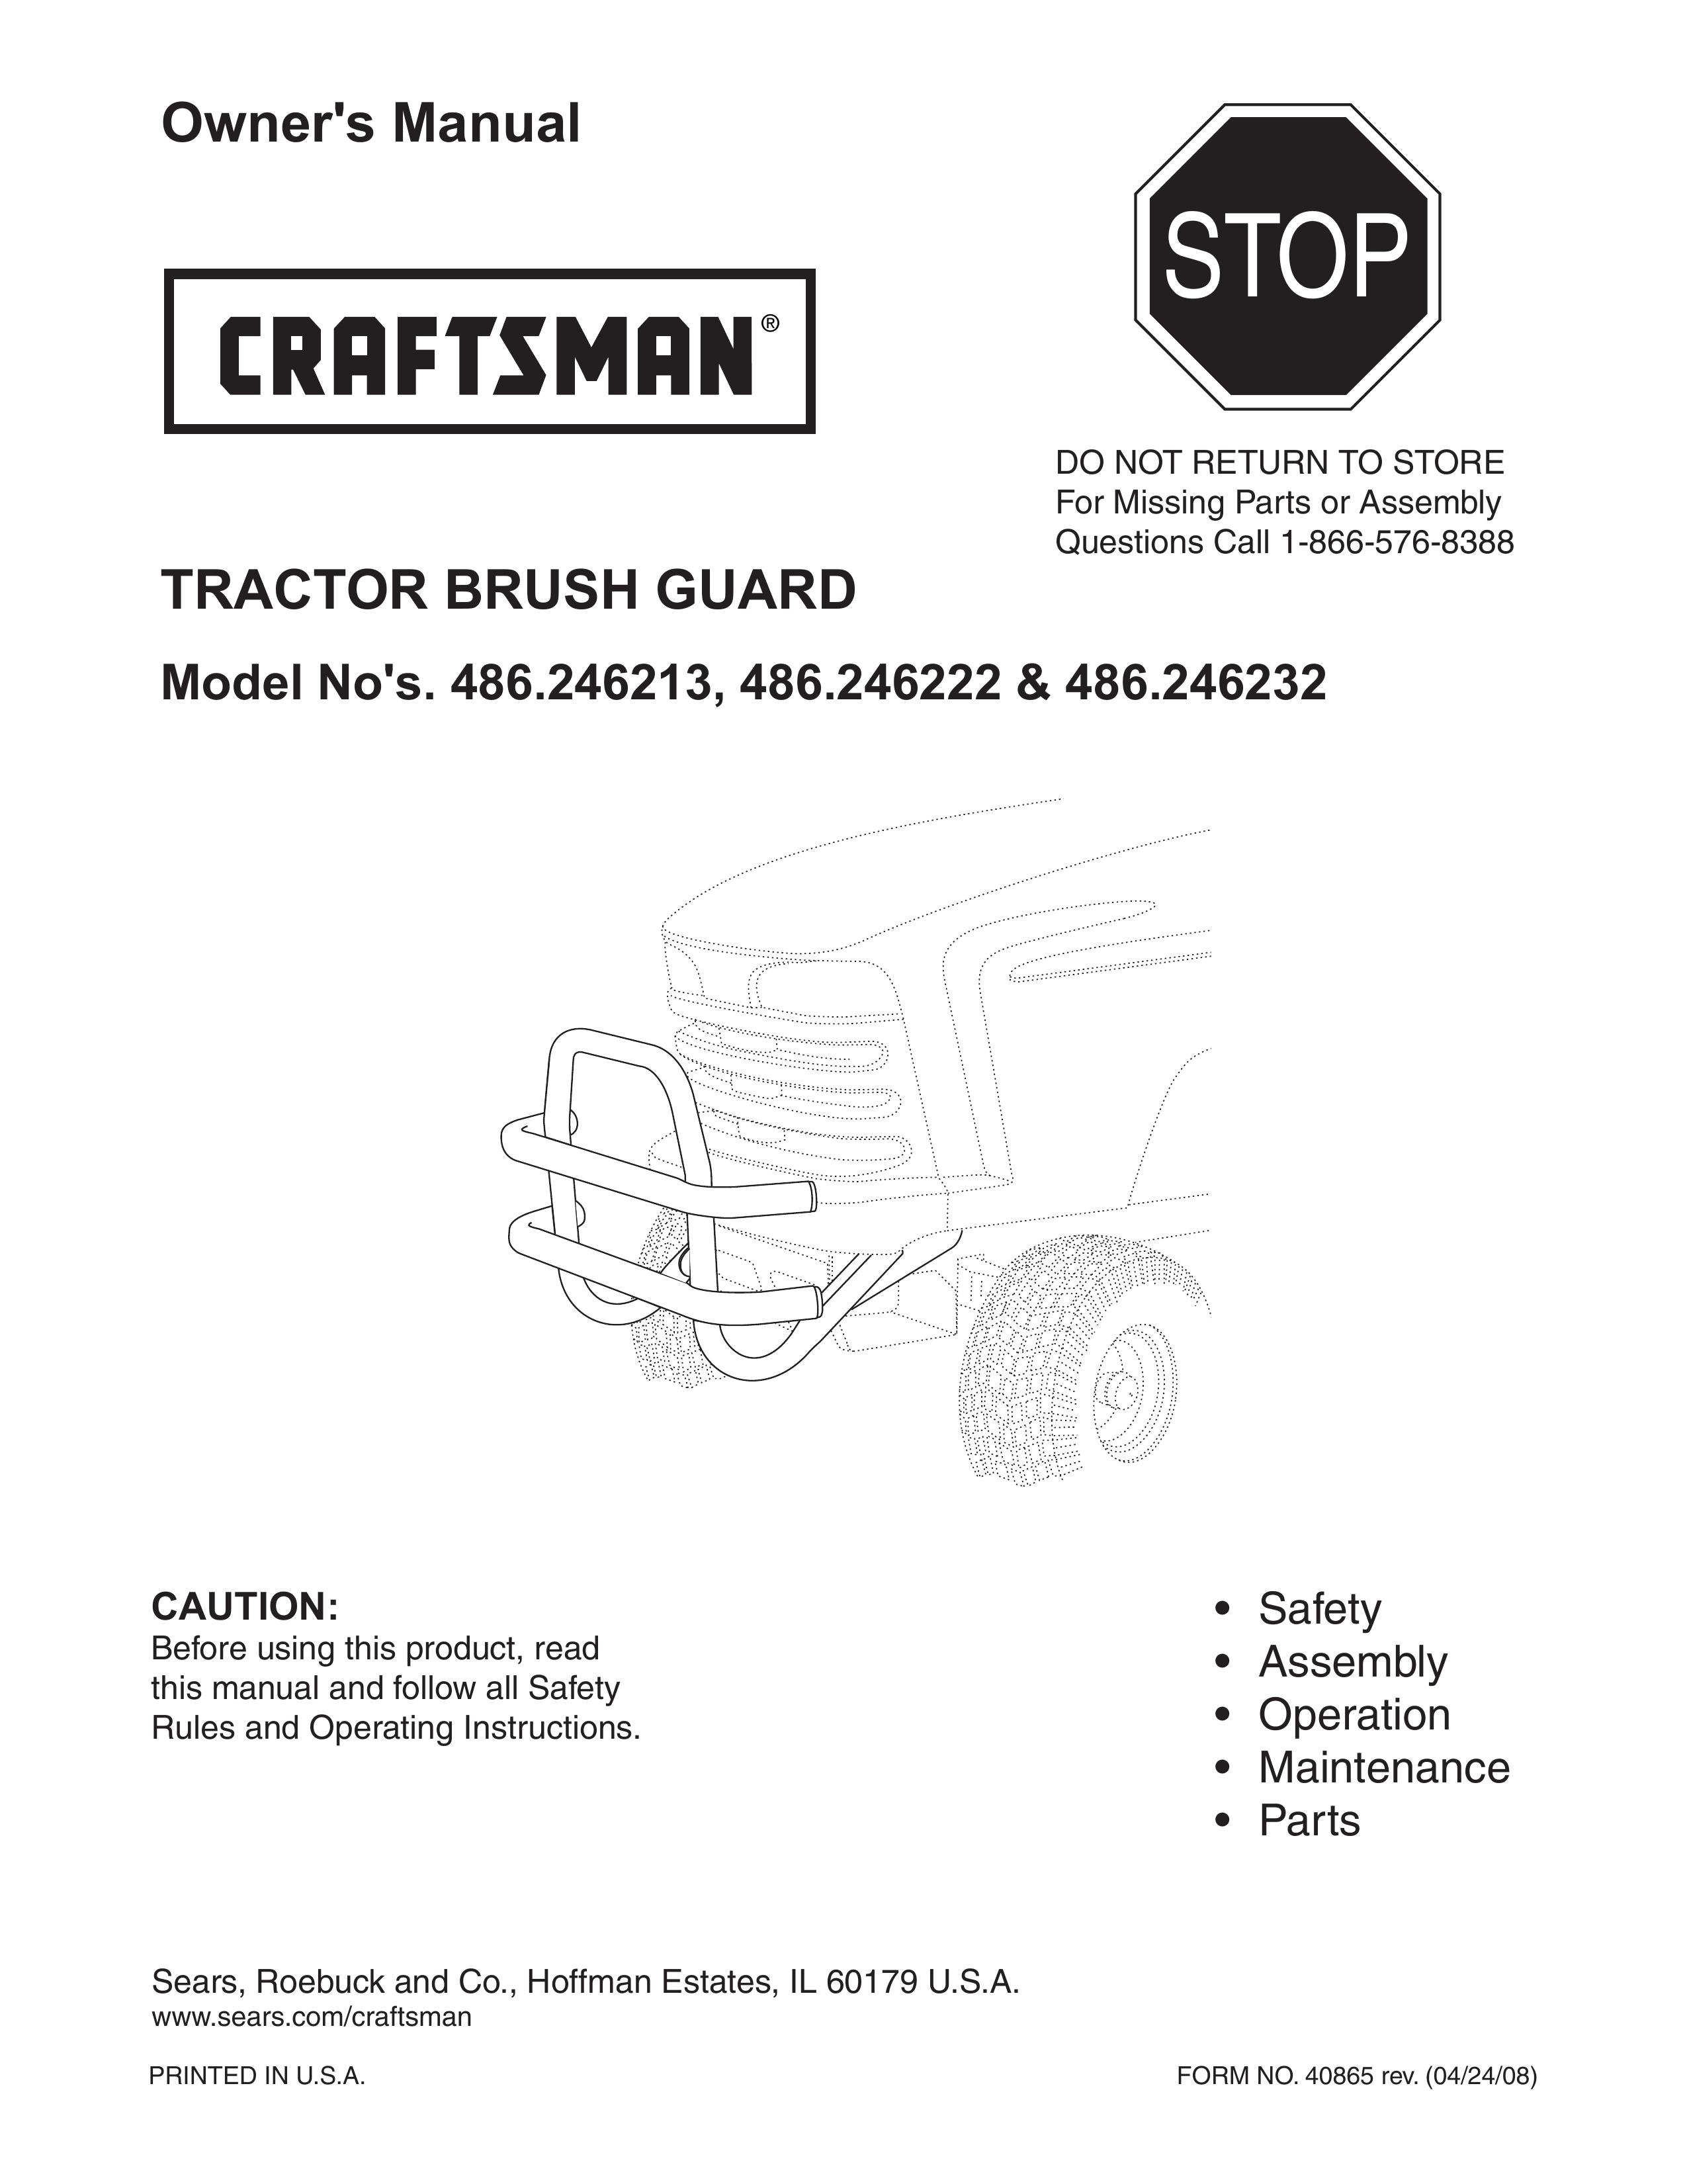 Craftsman 486.246213 Lawn Mower Accessory User Manual